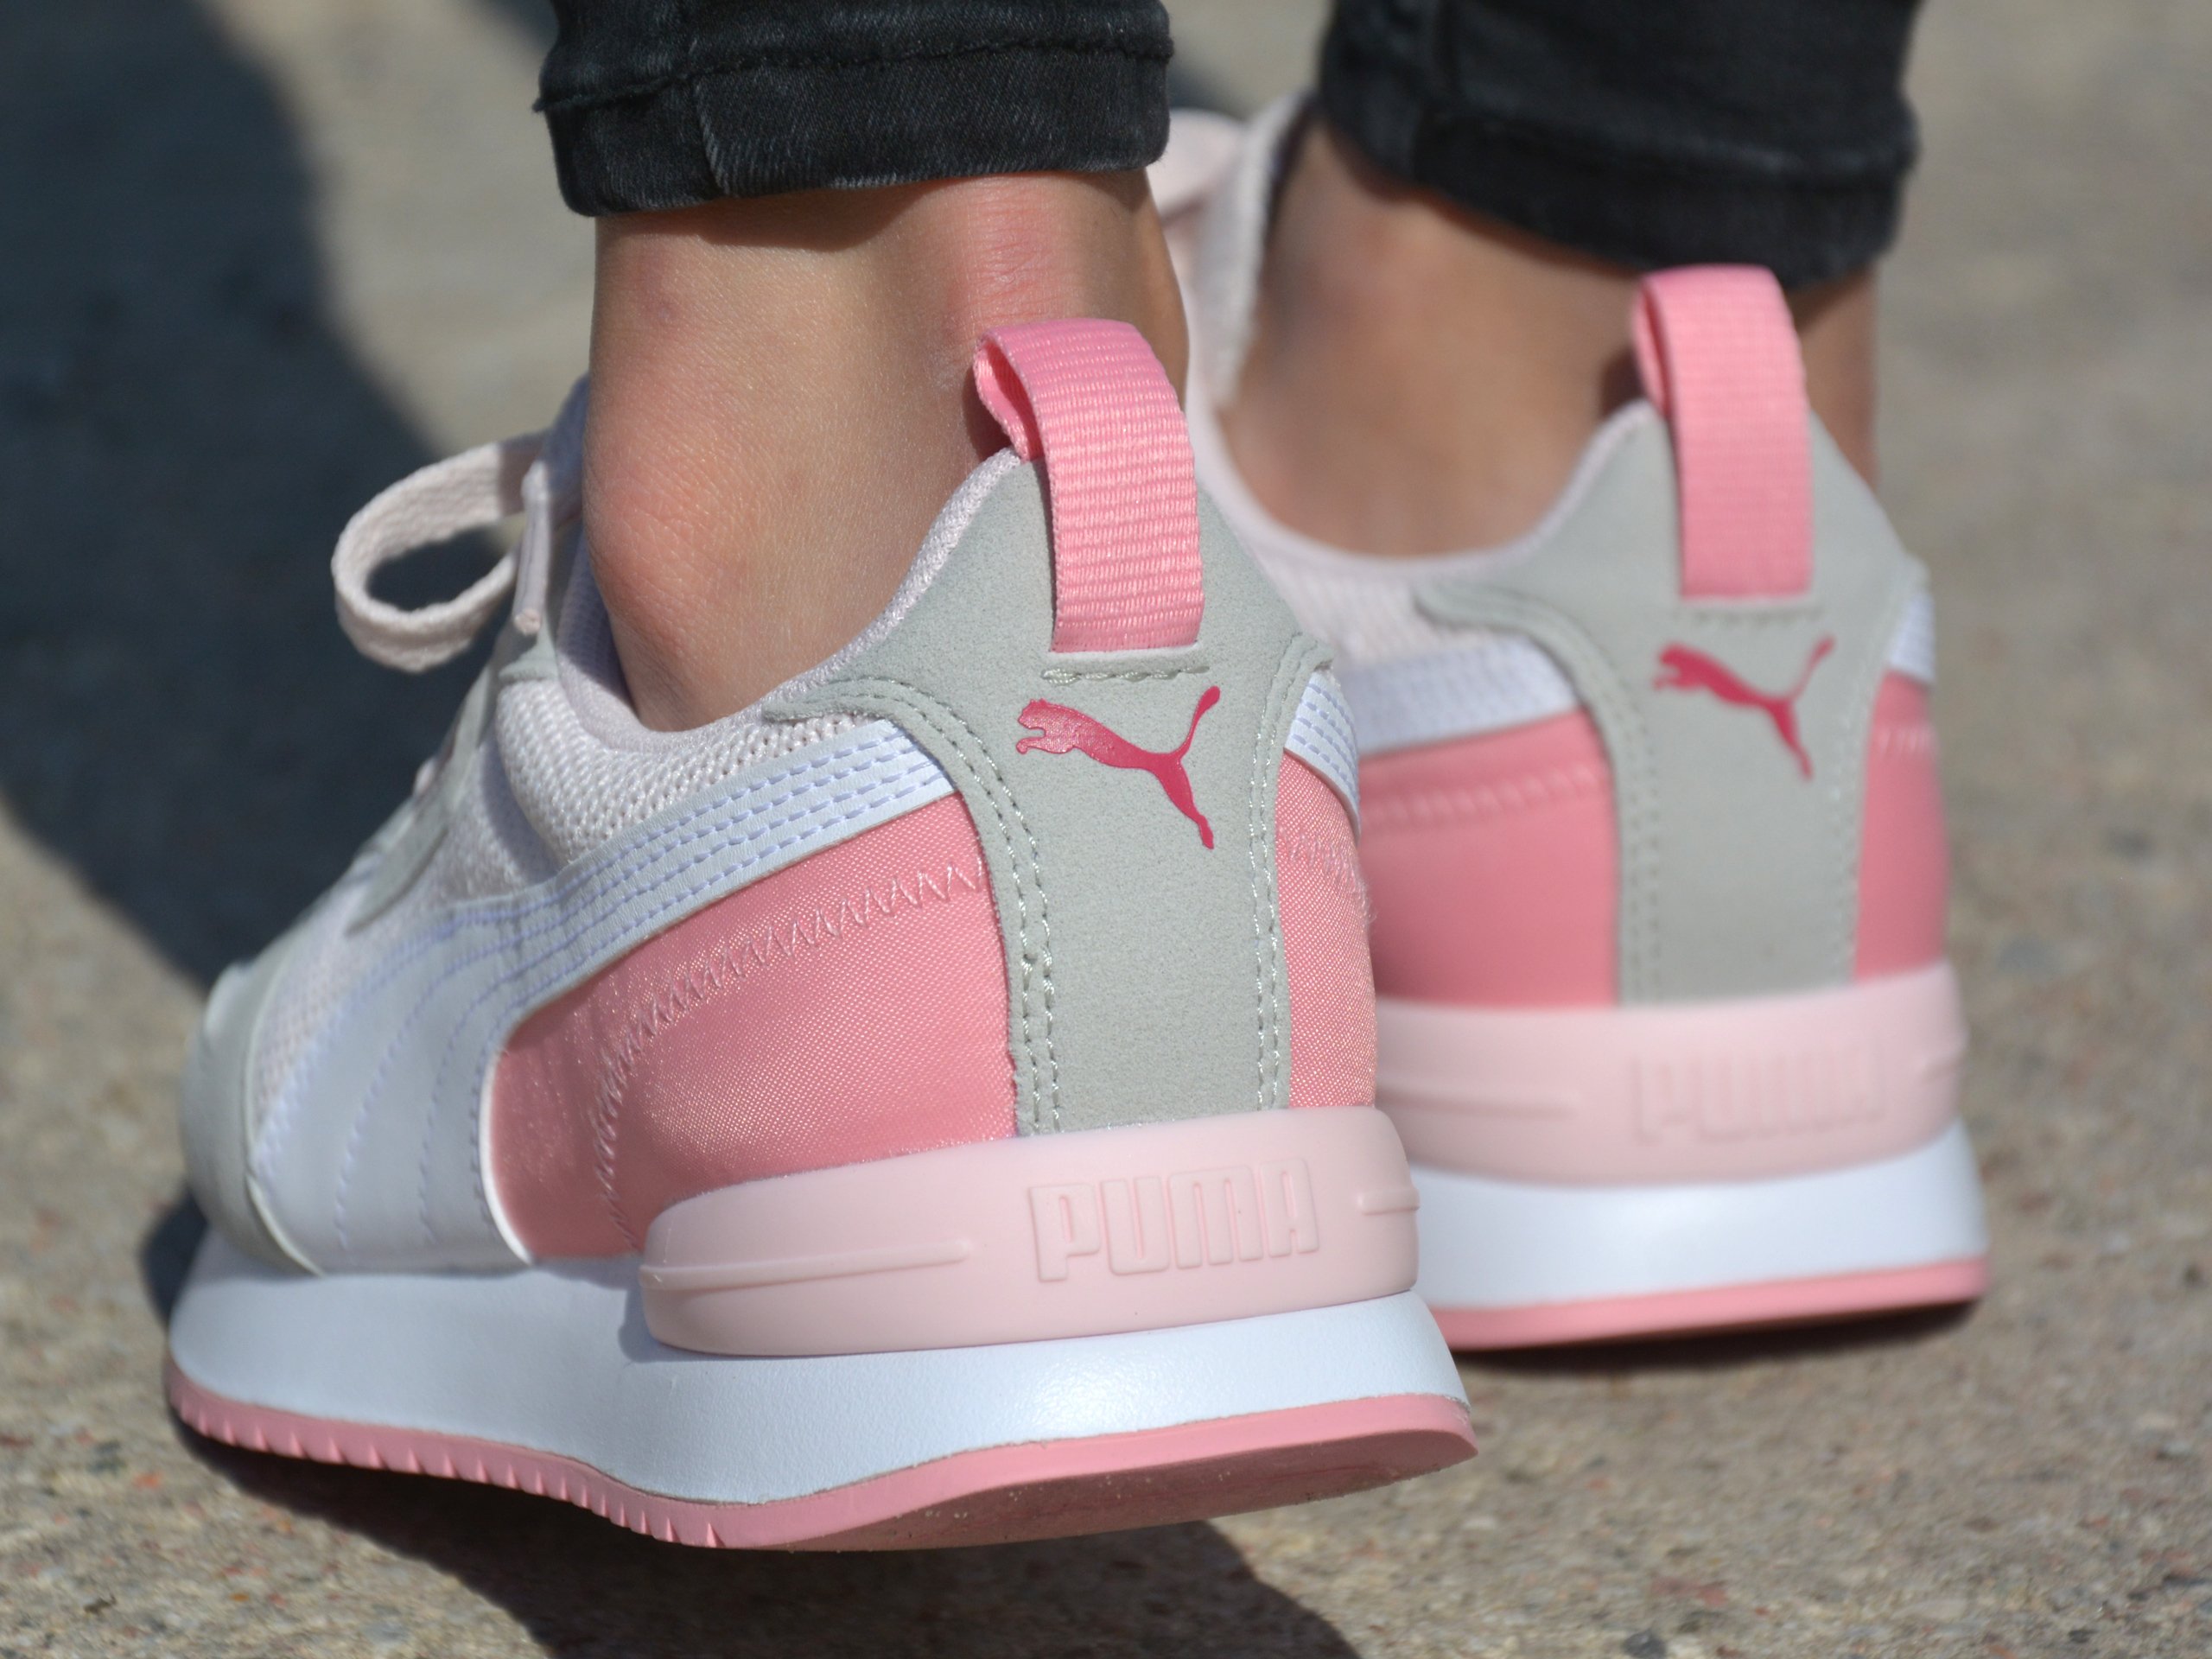 sports Kicks of Sneakers Womens \\ a - Pink White / trusted | Puma - Puma supplier - - Sport footwear 373616-04 R78 branded | Jr